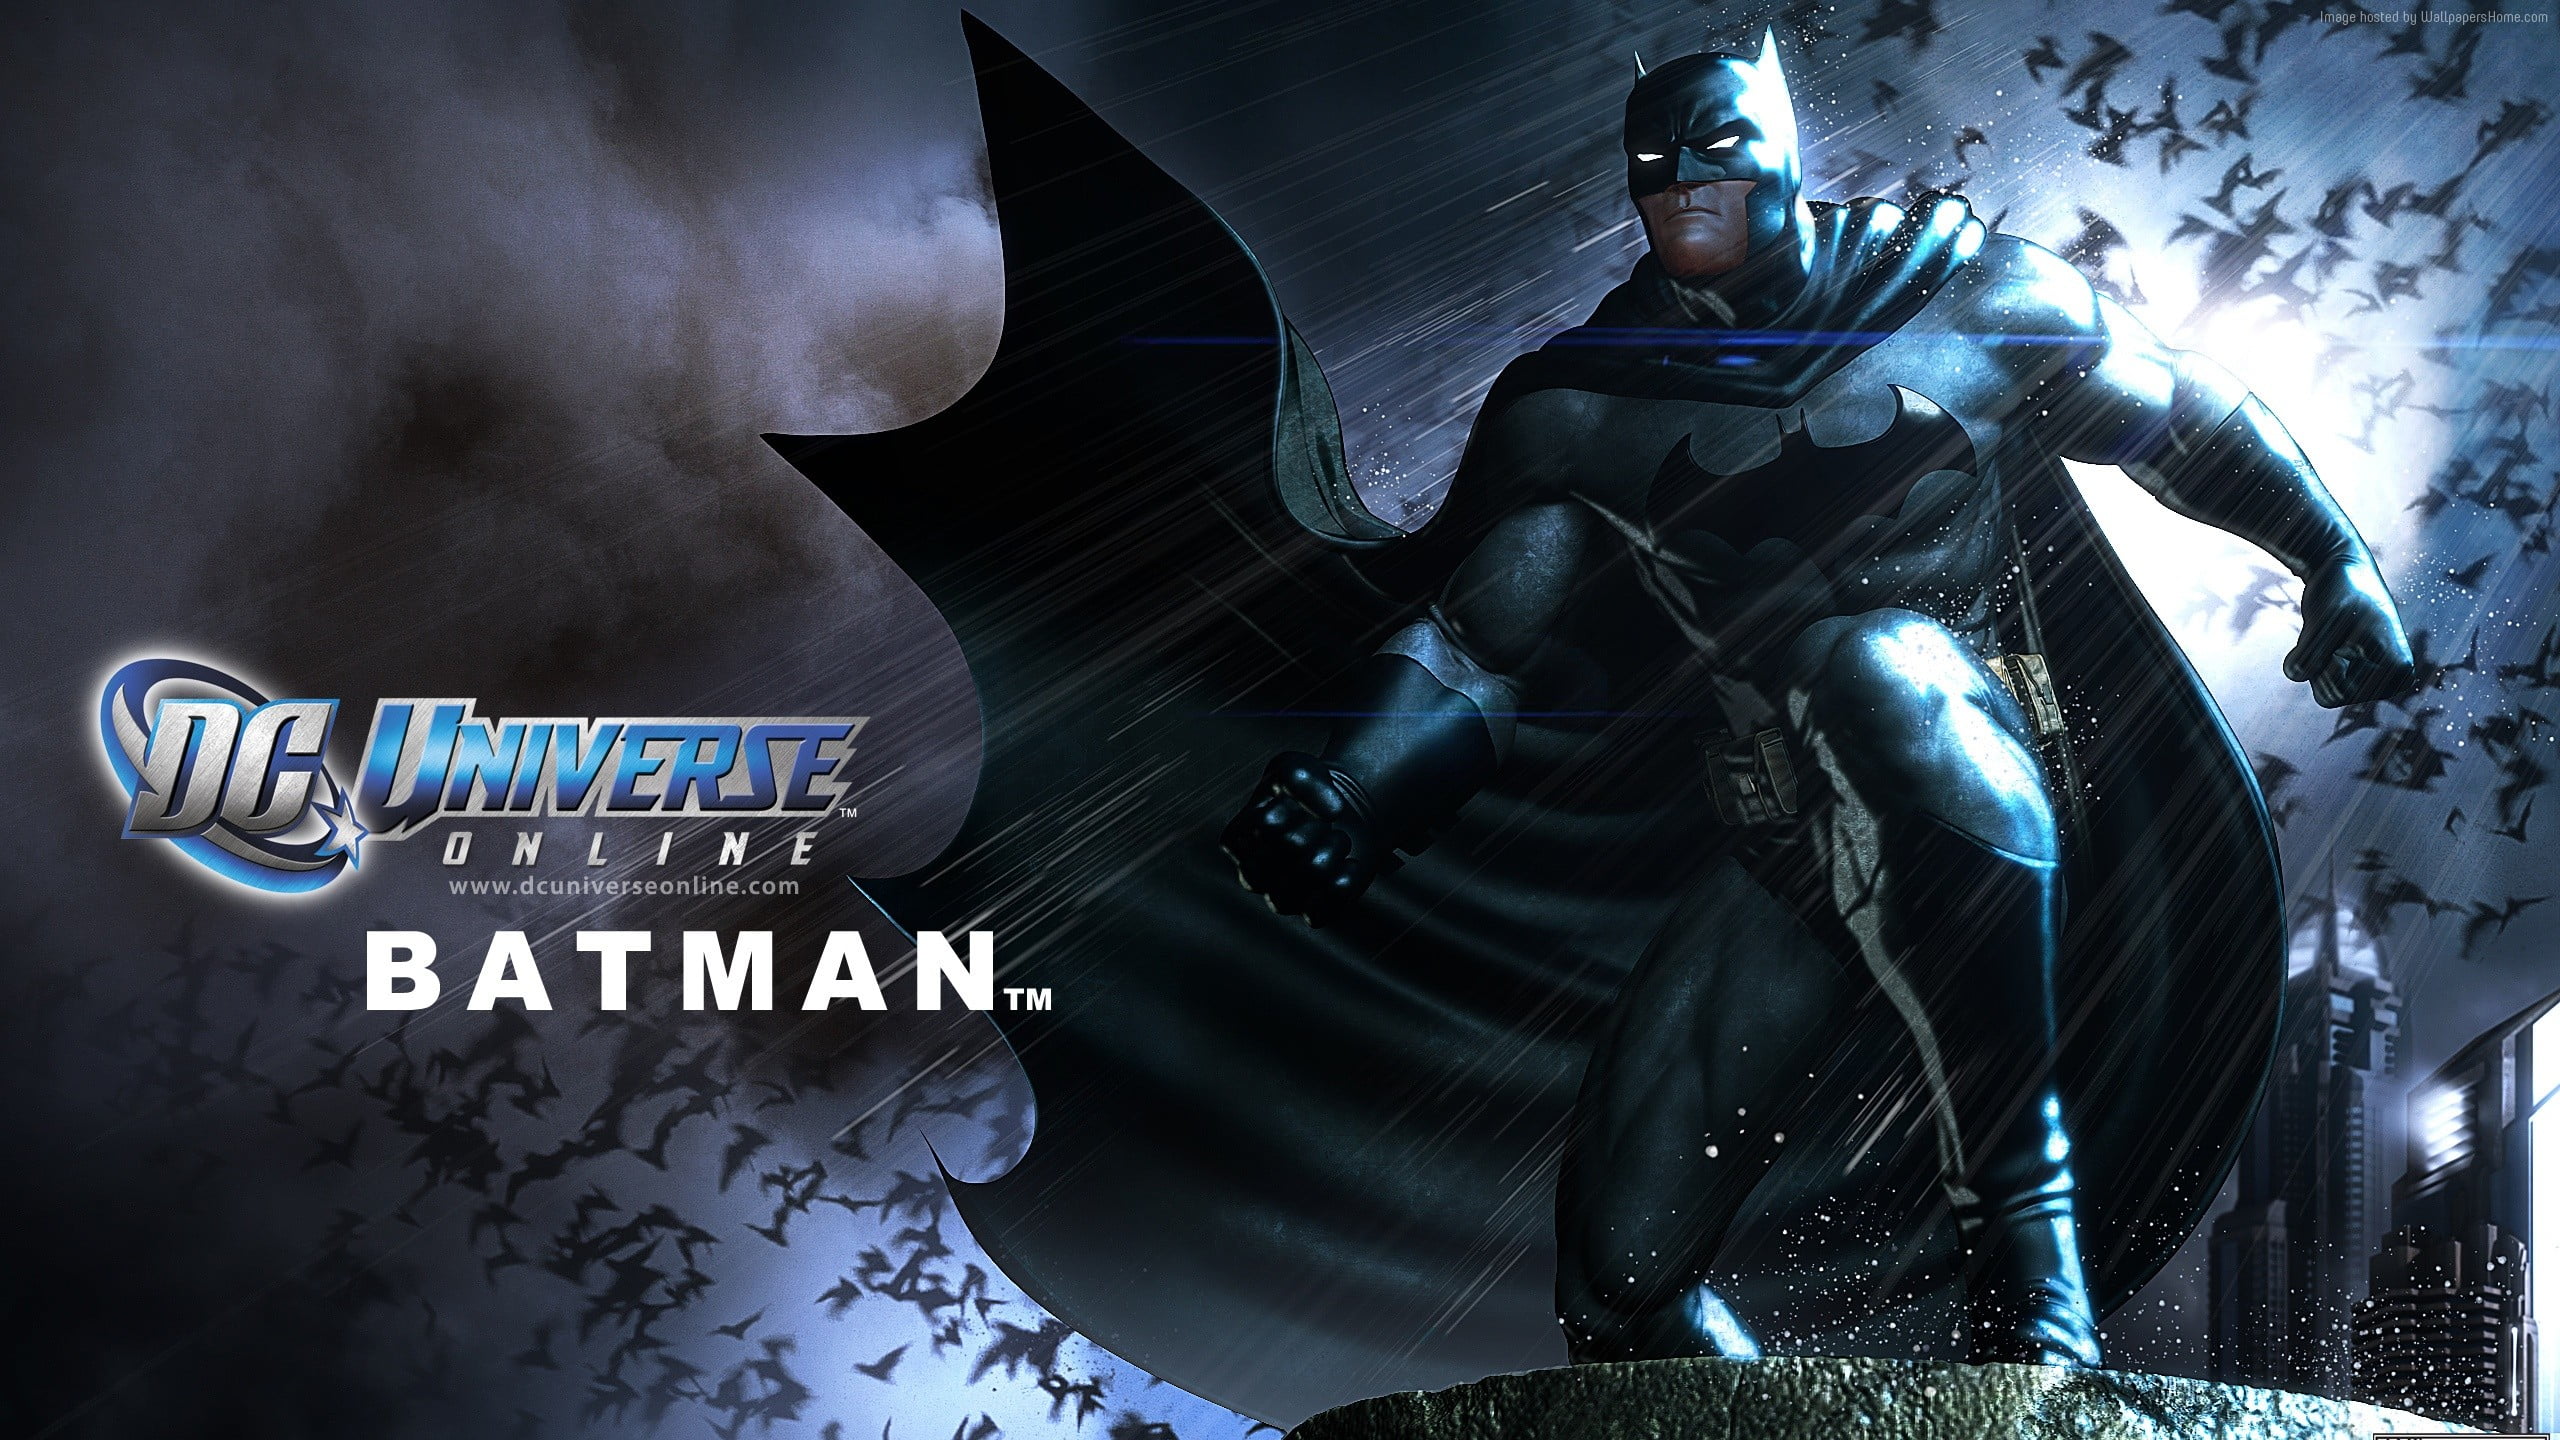 Batman video game screenshot